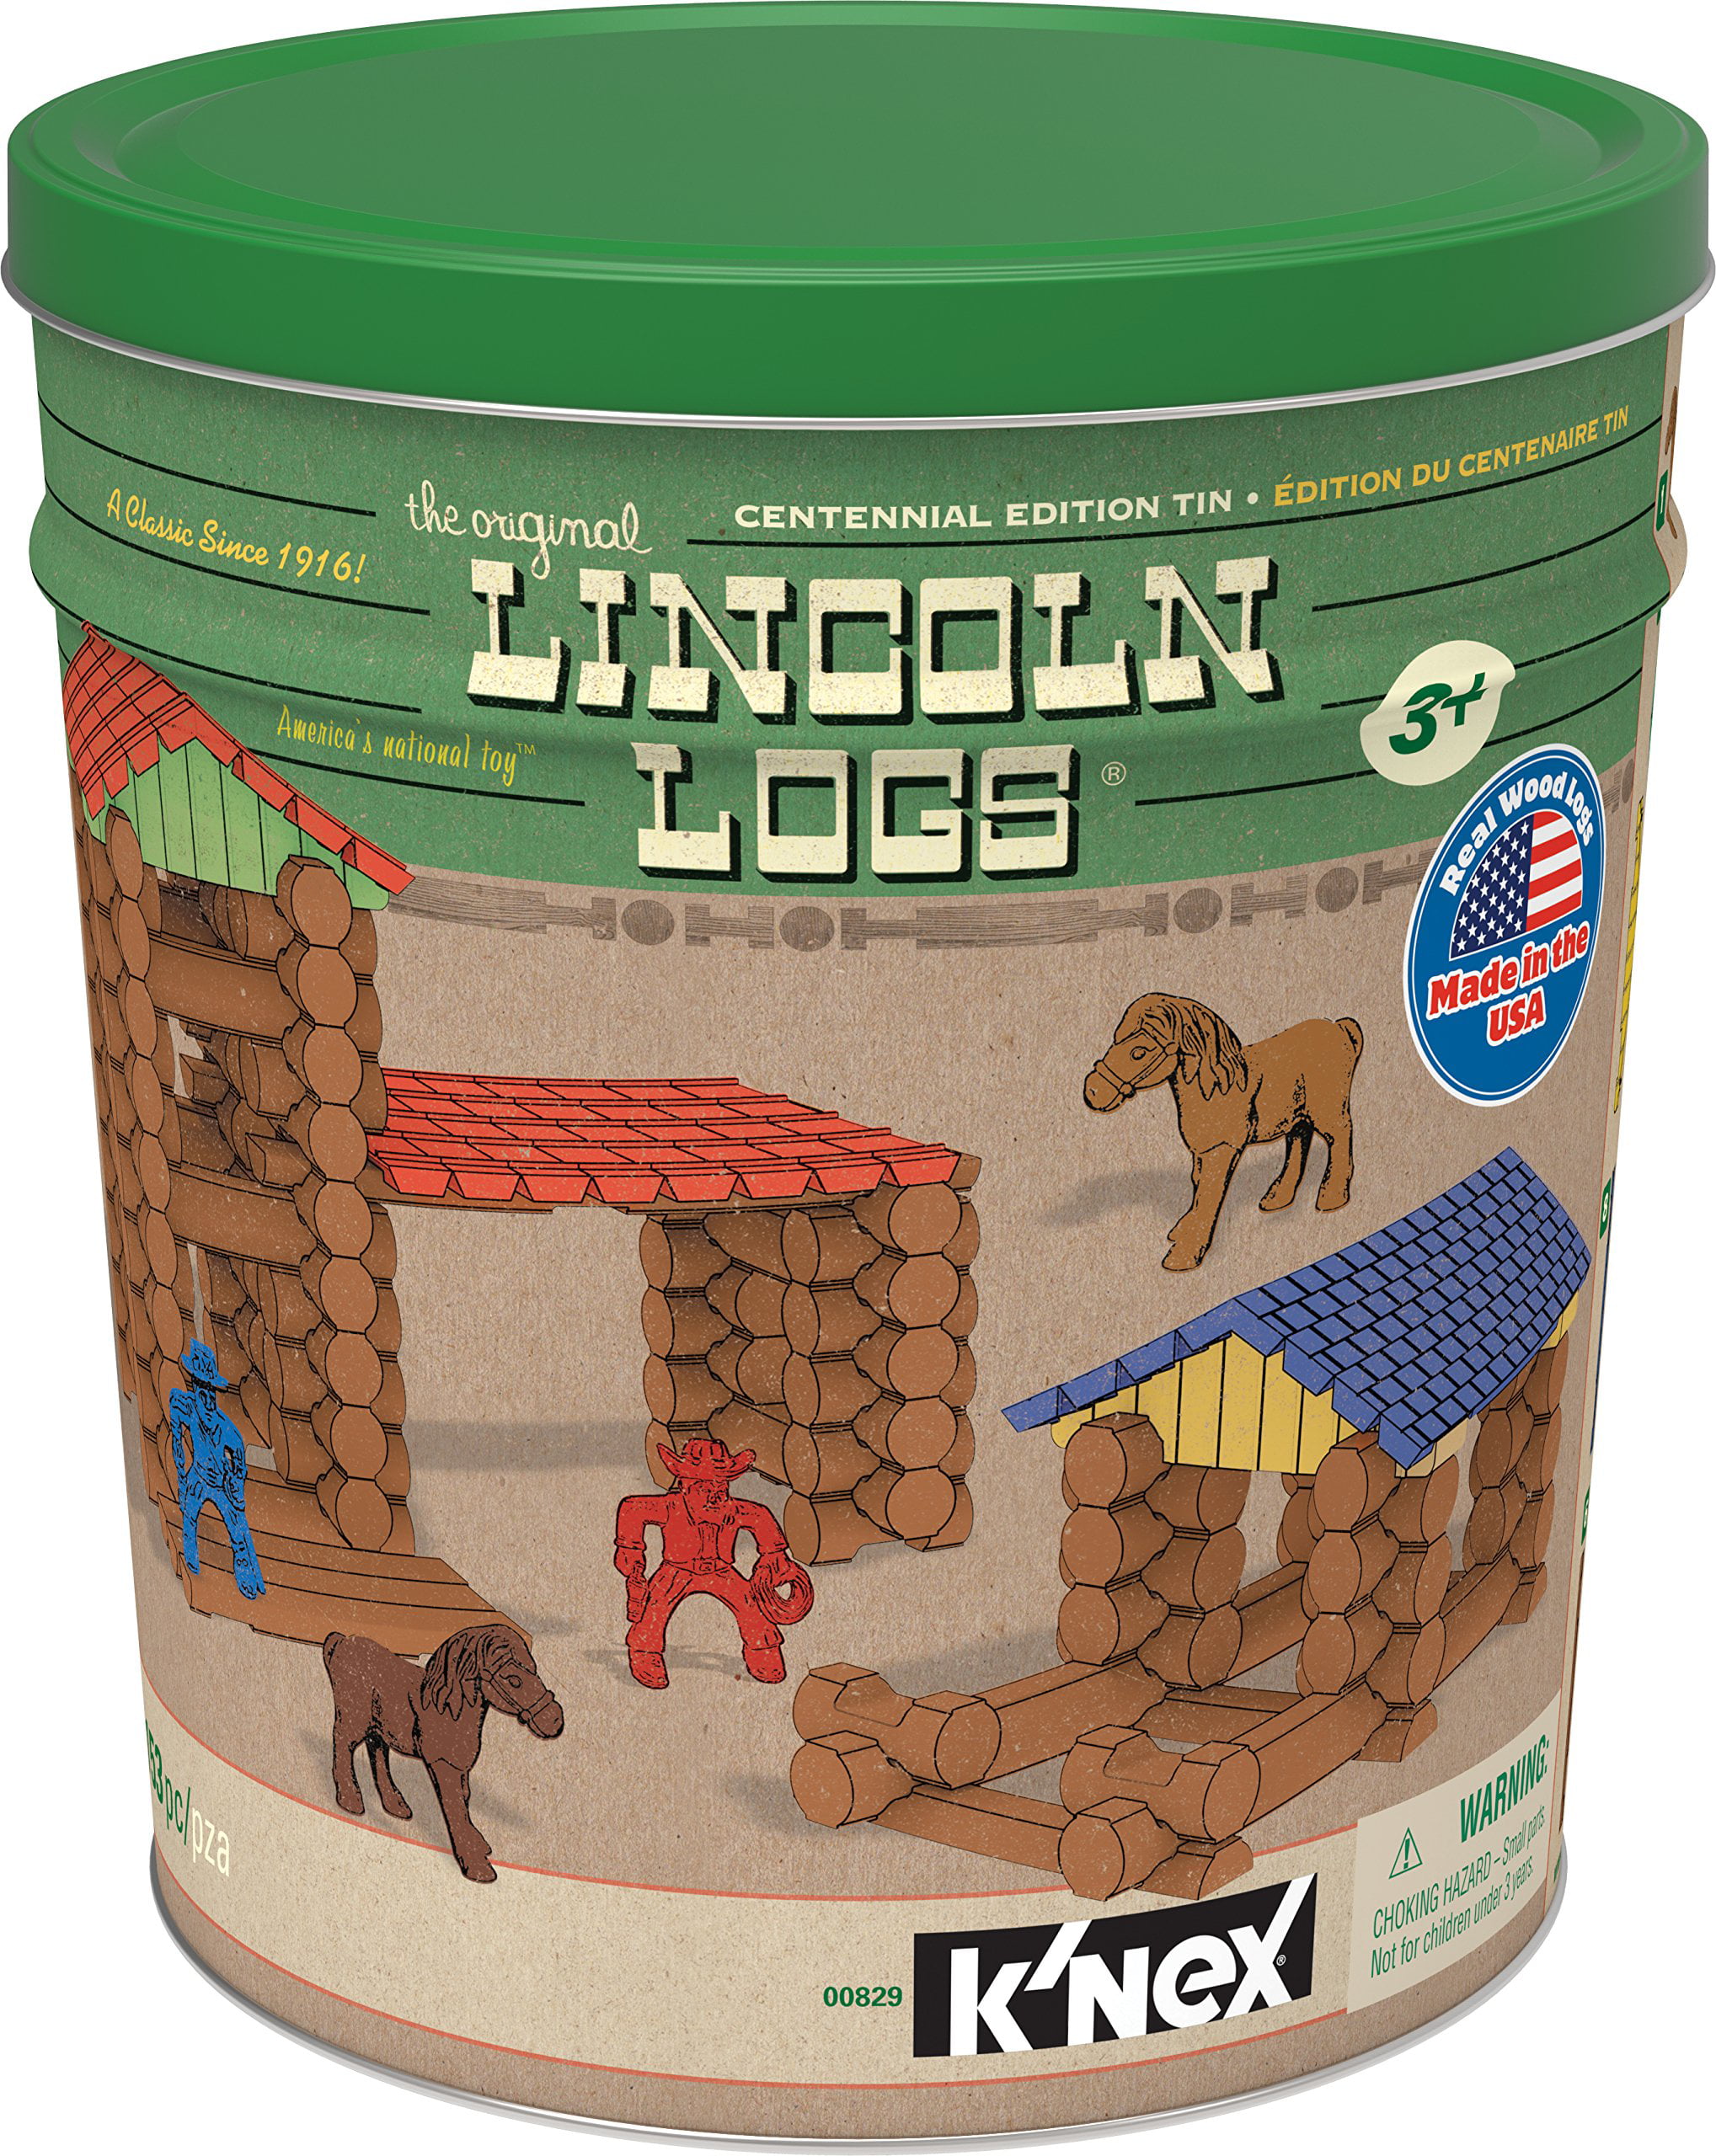 Brand New LINCOLN LOGS Centennial Edition Tin 